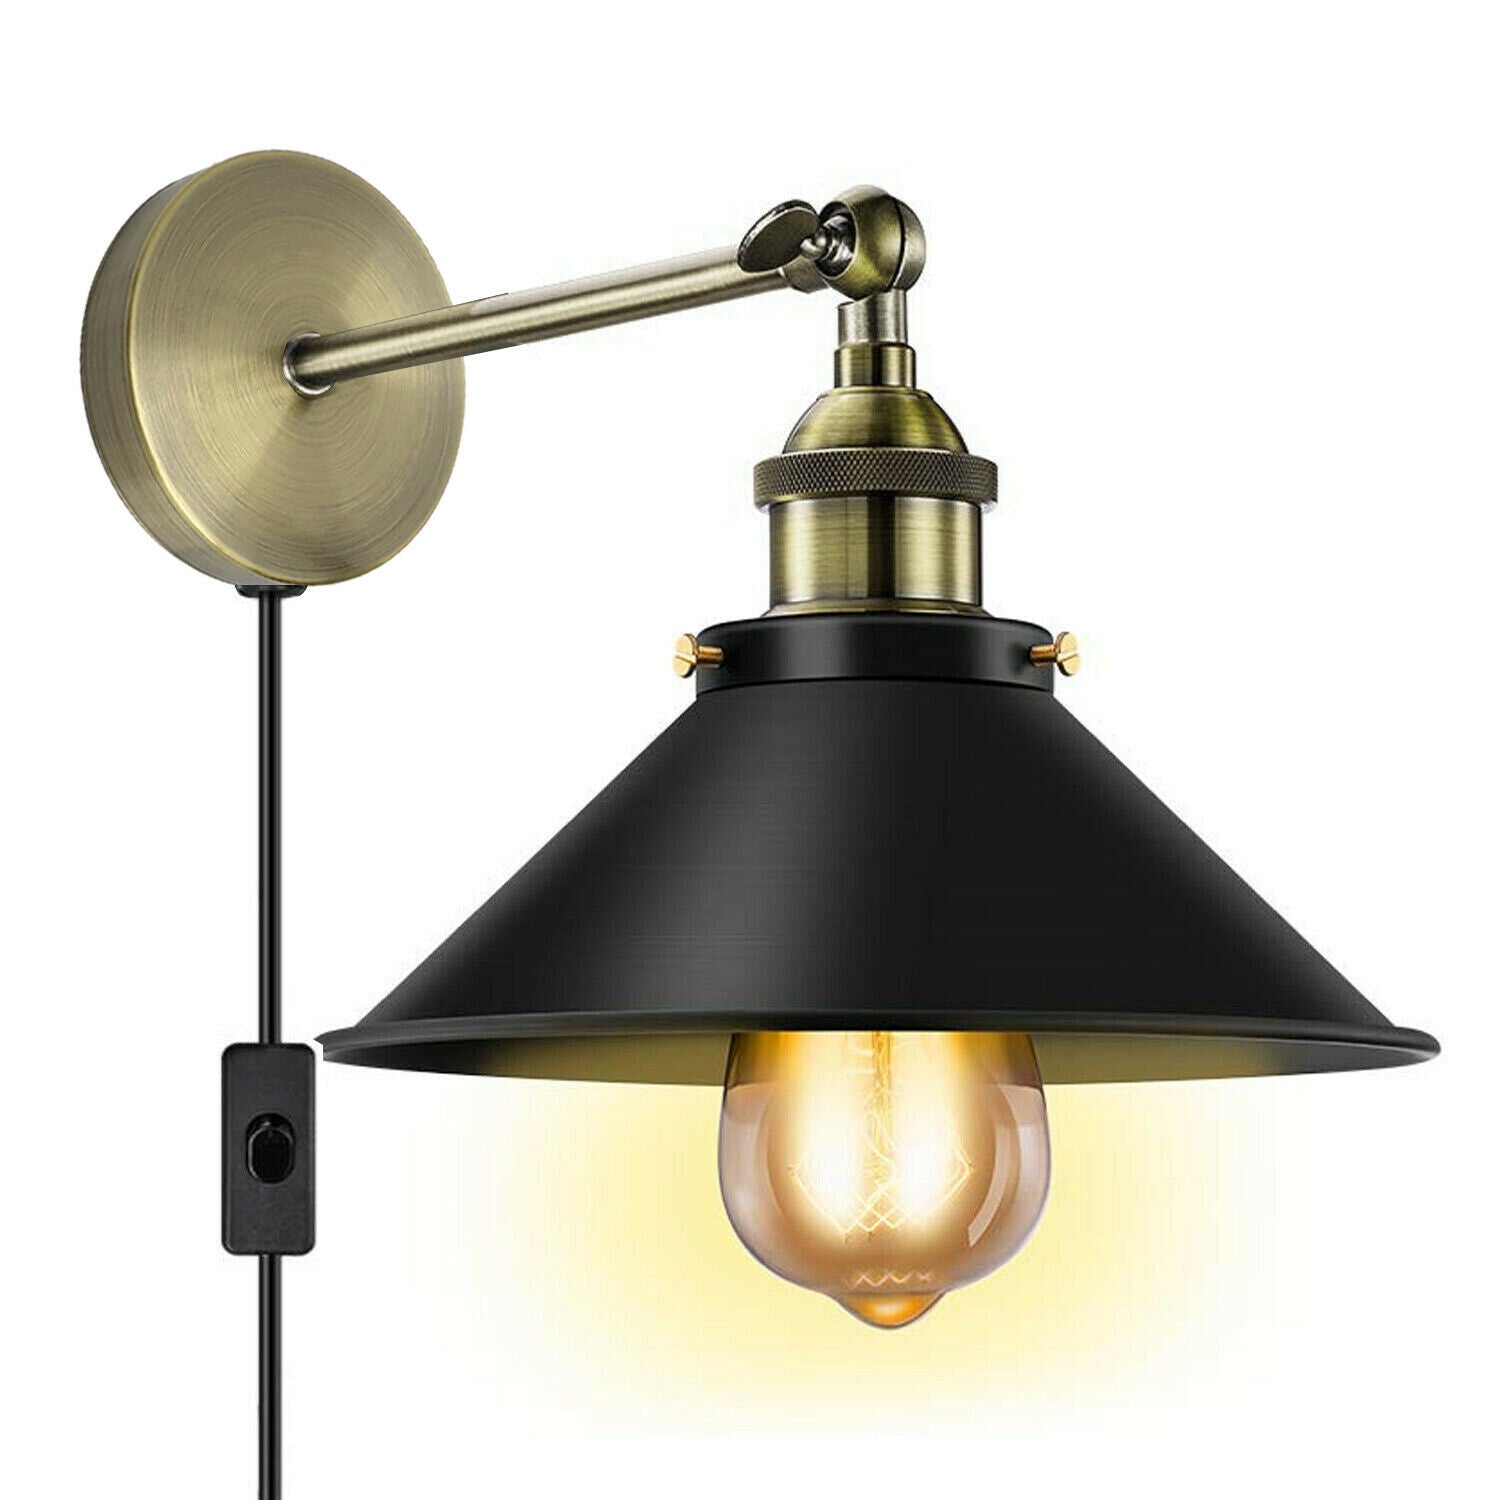 Vintage Retro Modern Plug In Wall Light Fitting Black Sconce with FREE Bulb Lamp shade fitting Shade Wall Light UK~2271 - LEDSone UK Ltd